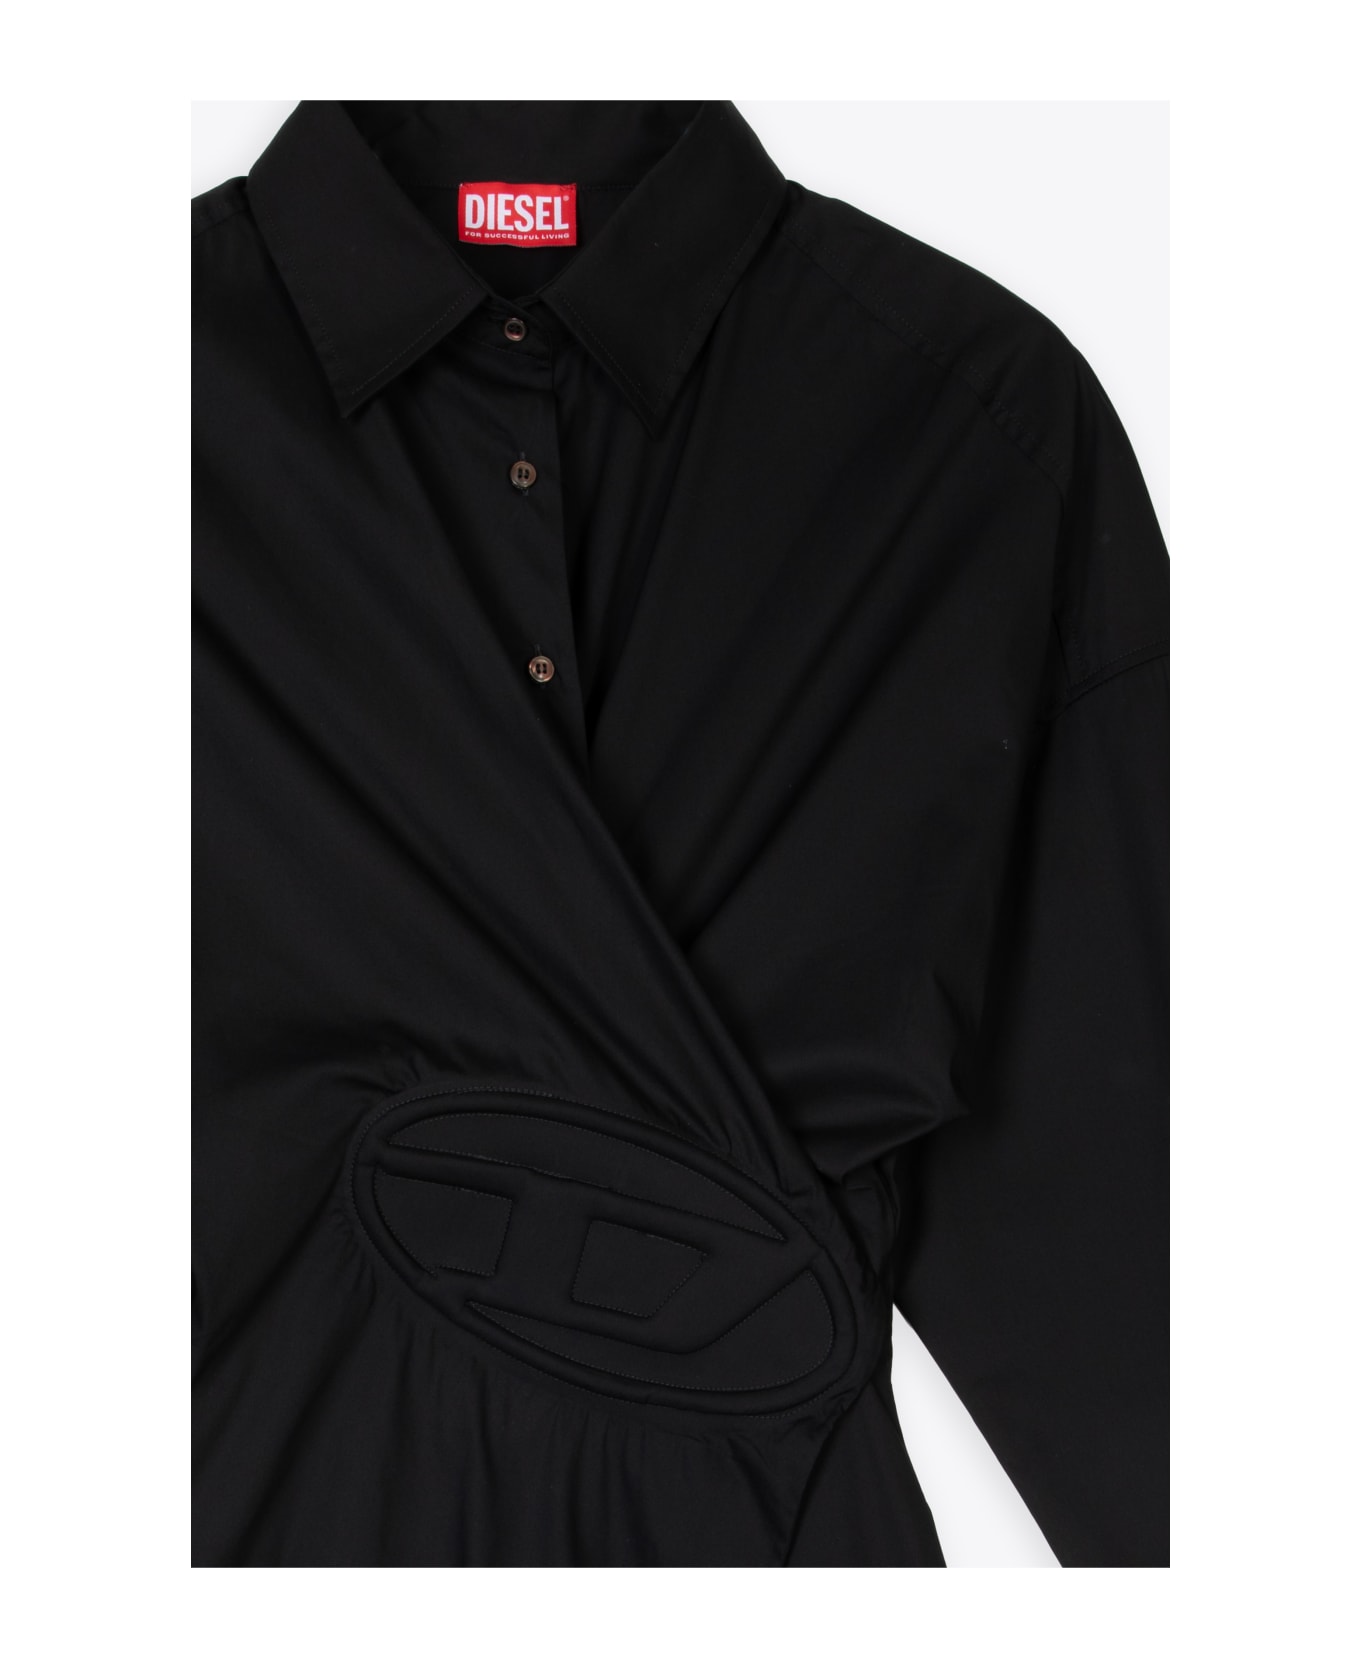 Diesel D-sizen-n1 Black poplin shirt/dress with logo - D Sizen N1 - Nero